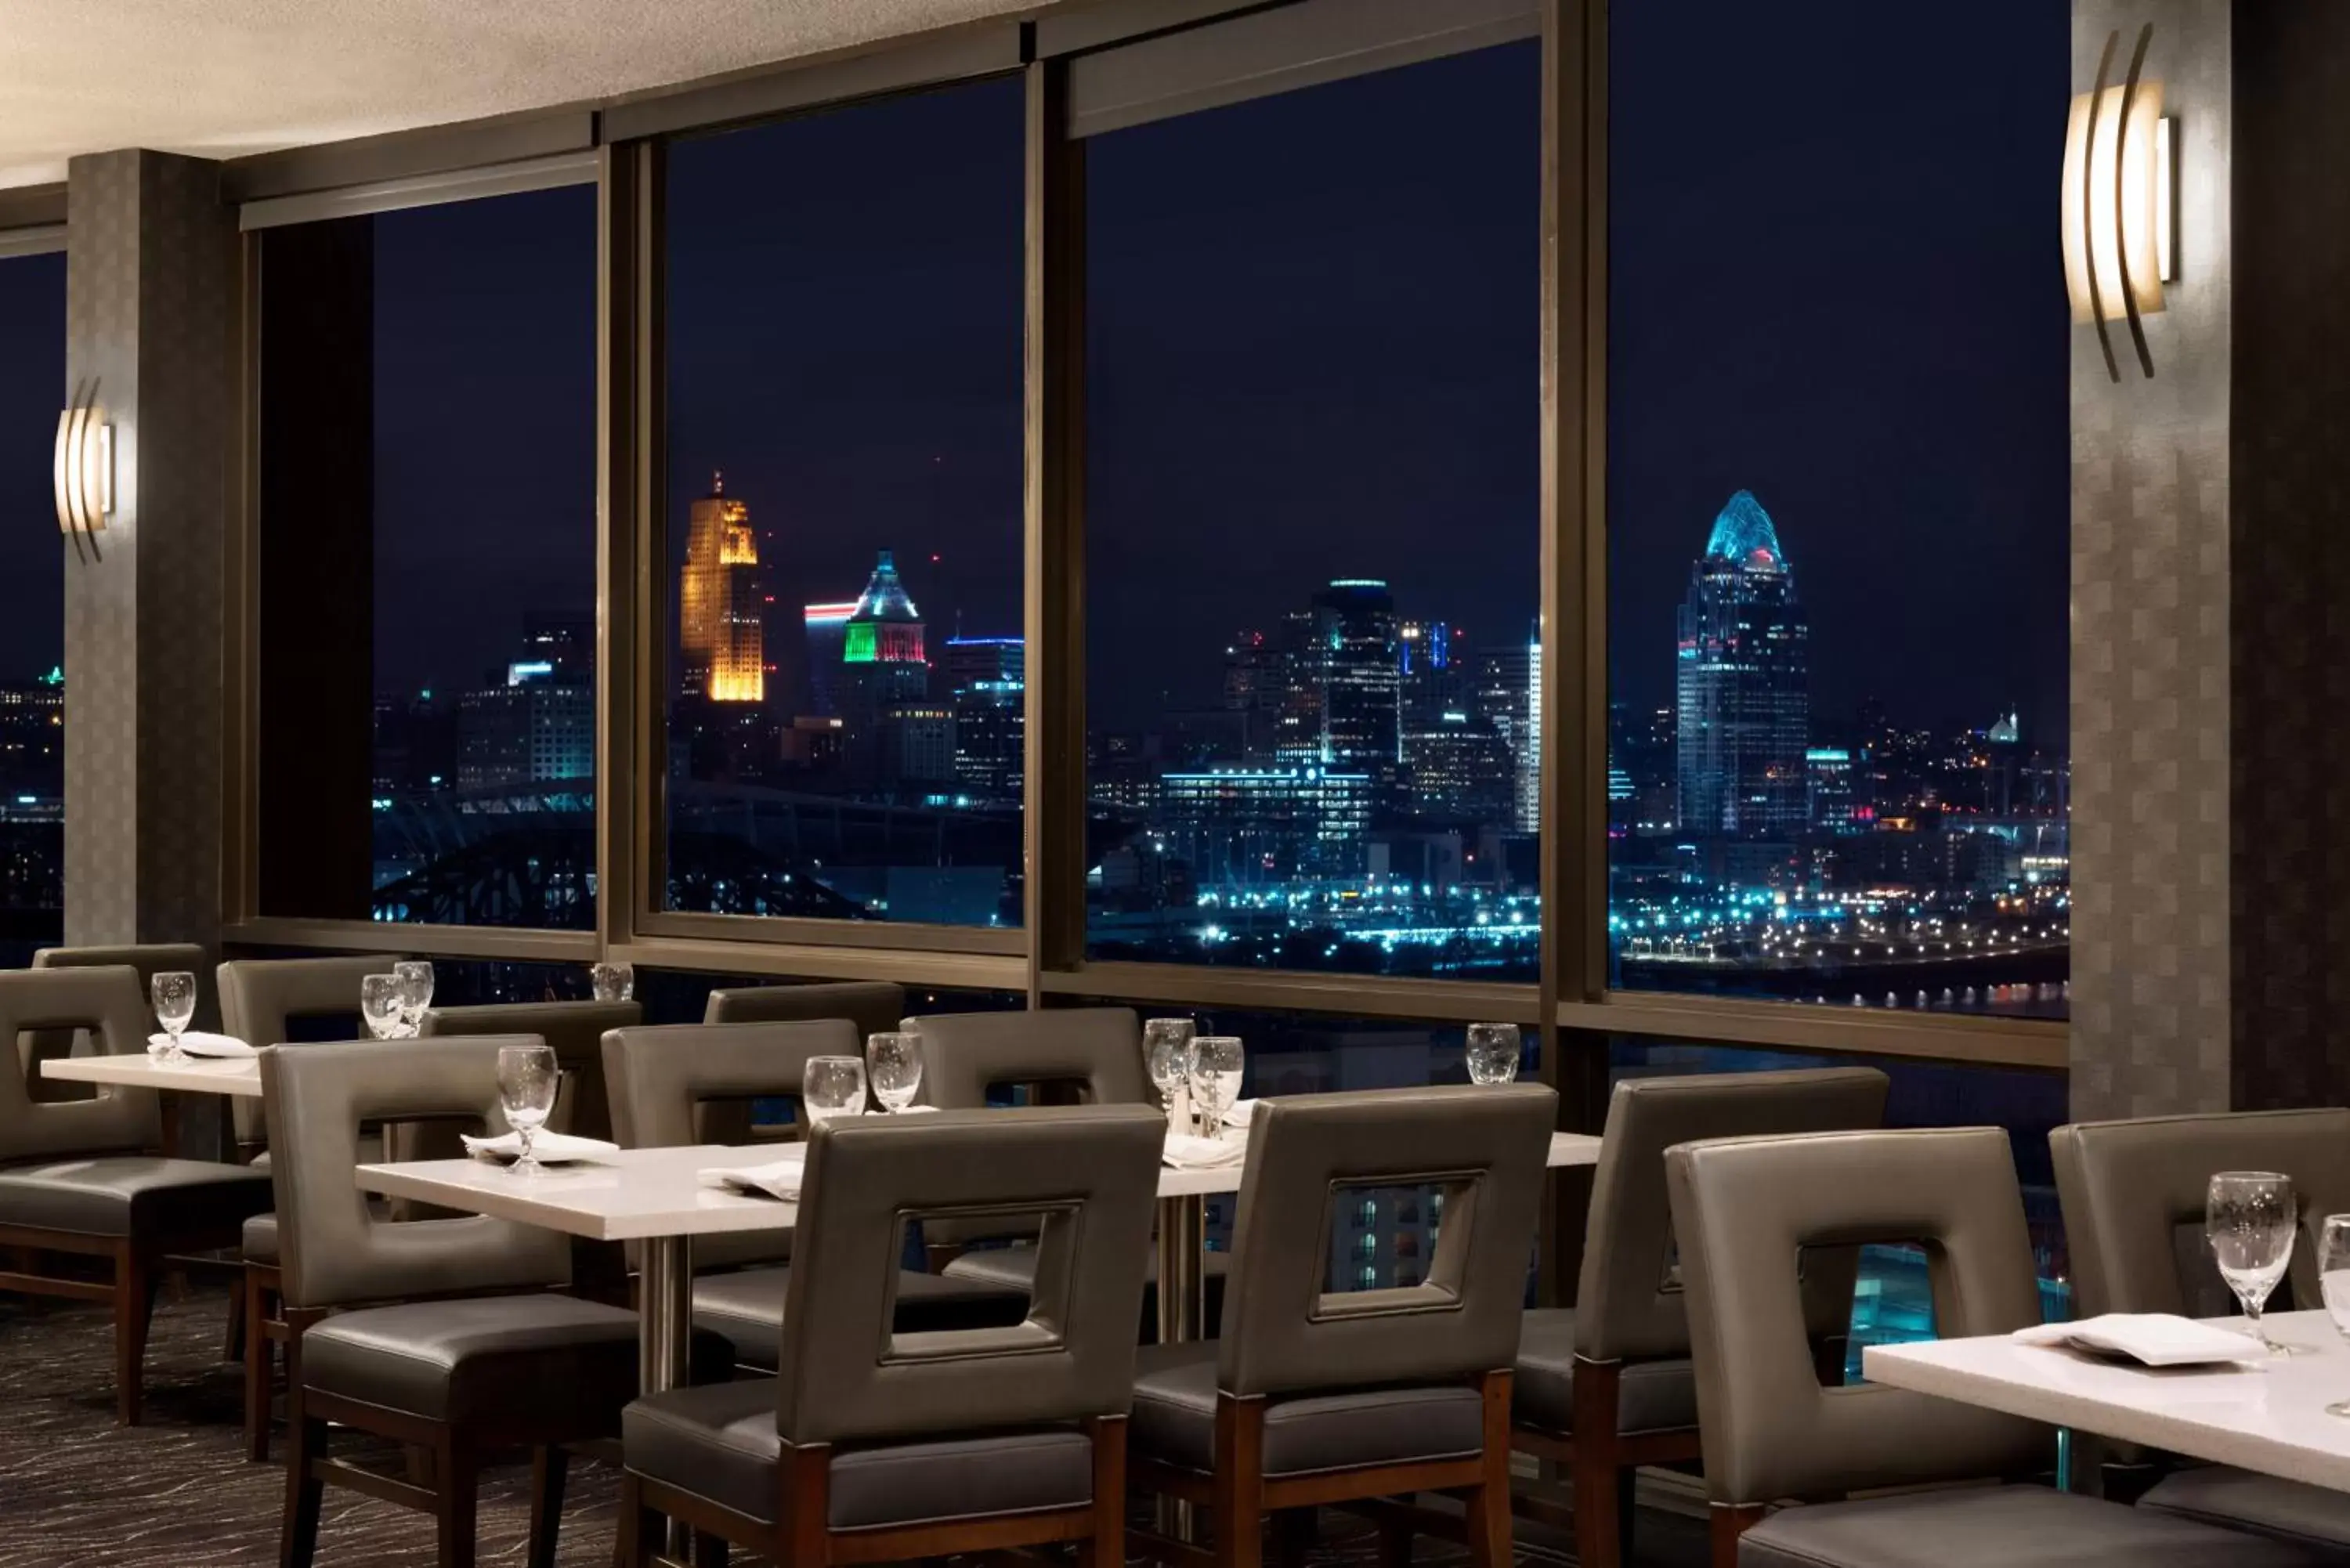 Dining area in Radisson Hotel Cincinnati Riverfront